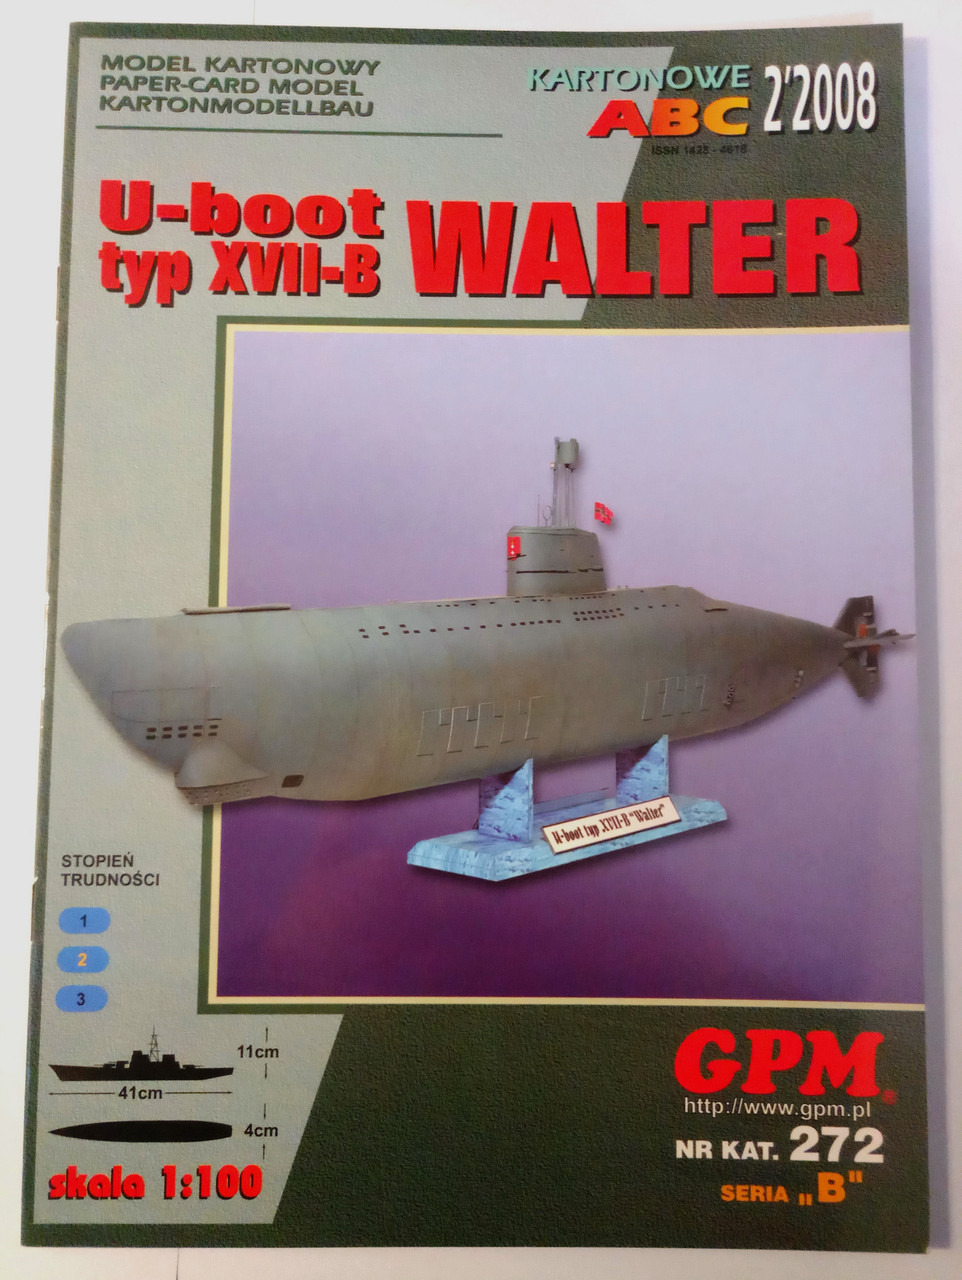 U-boot typ XVII-B WALTER 1/100